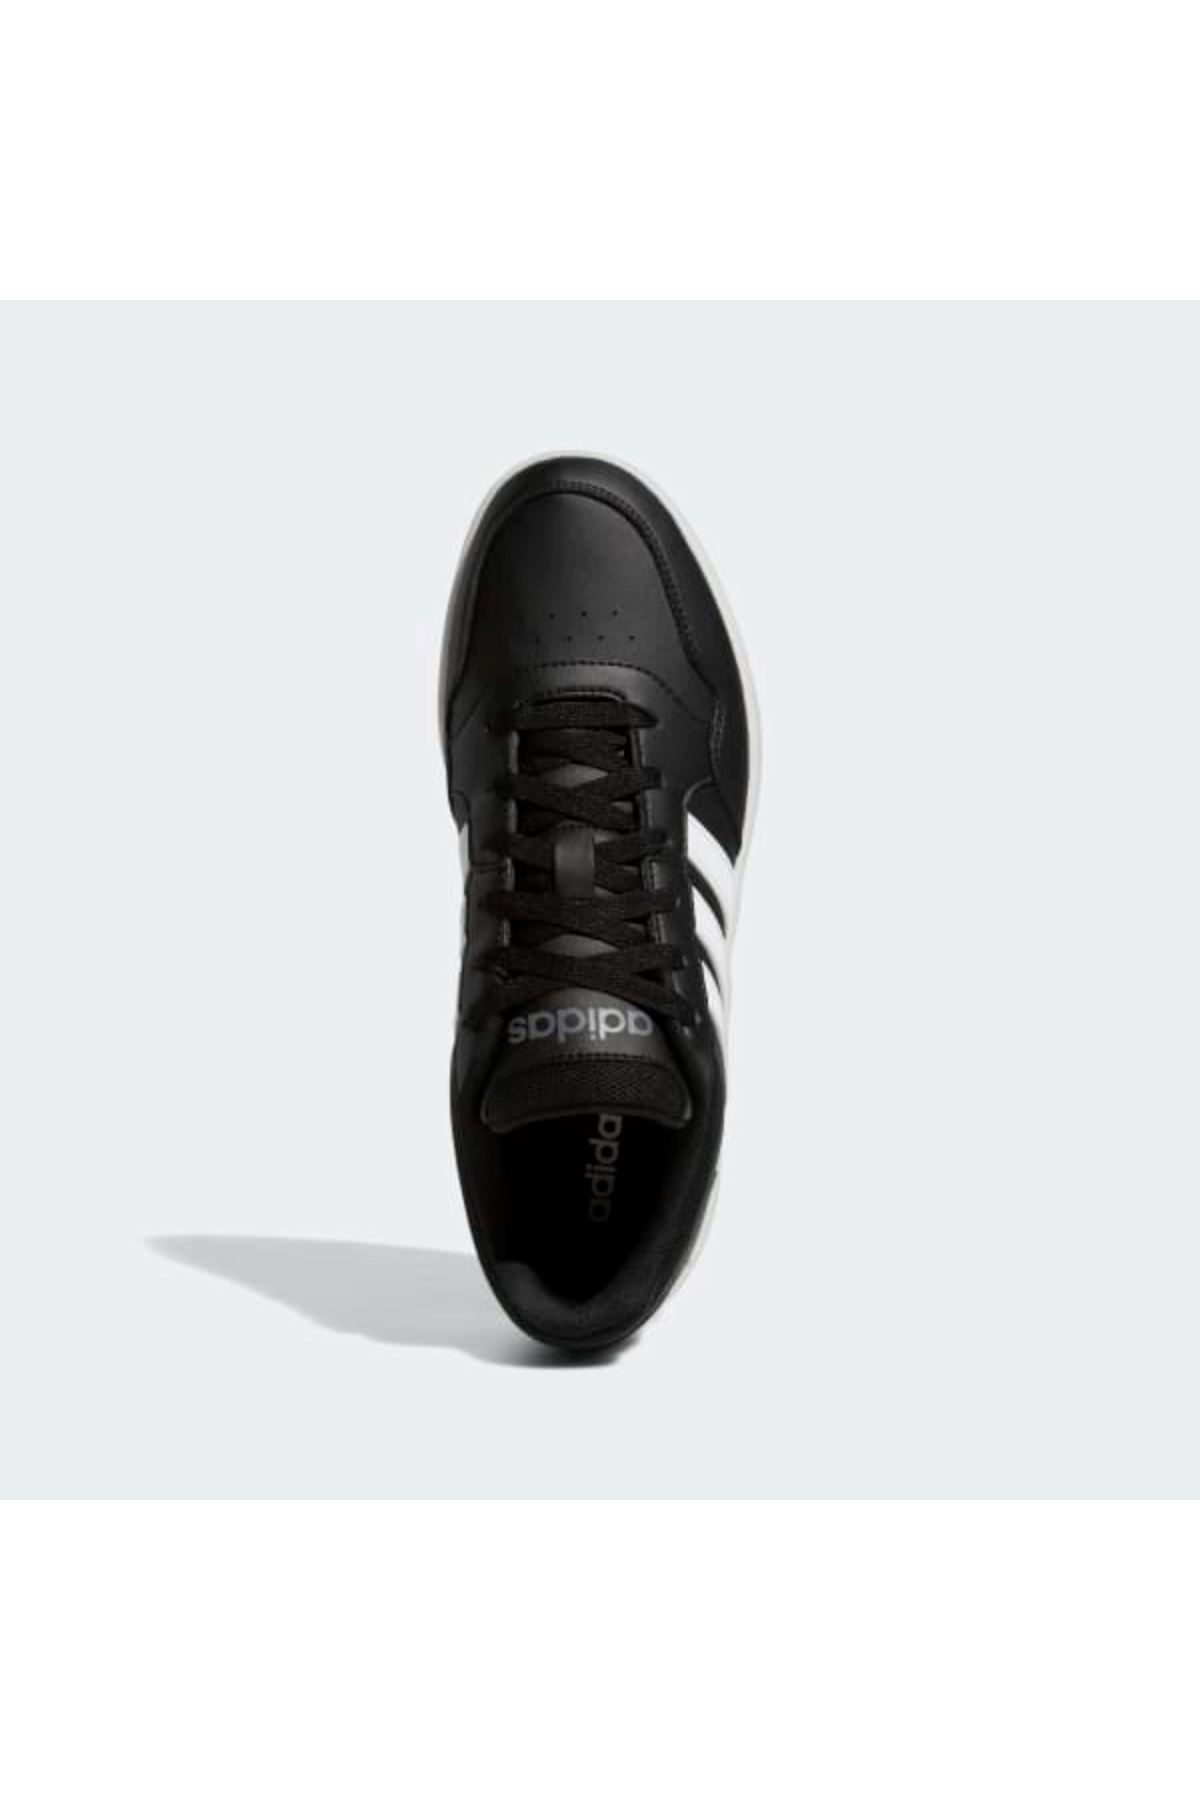 Adidas Hoops 3.0 Erkek Siyah Spor Ayakkabı - GY5432